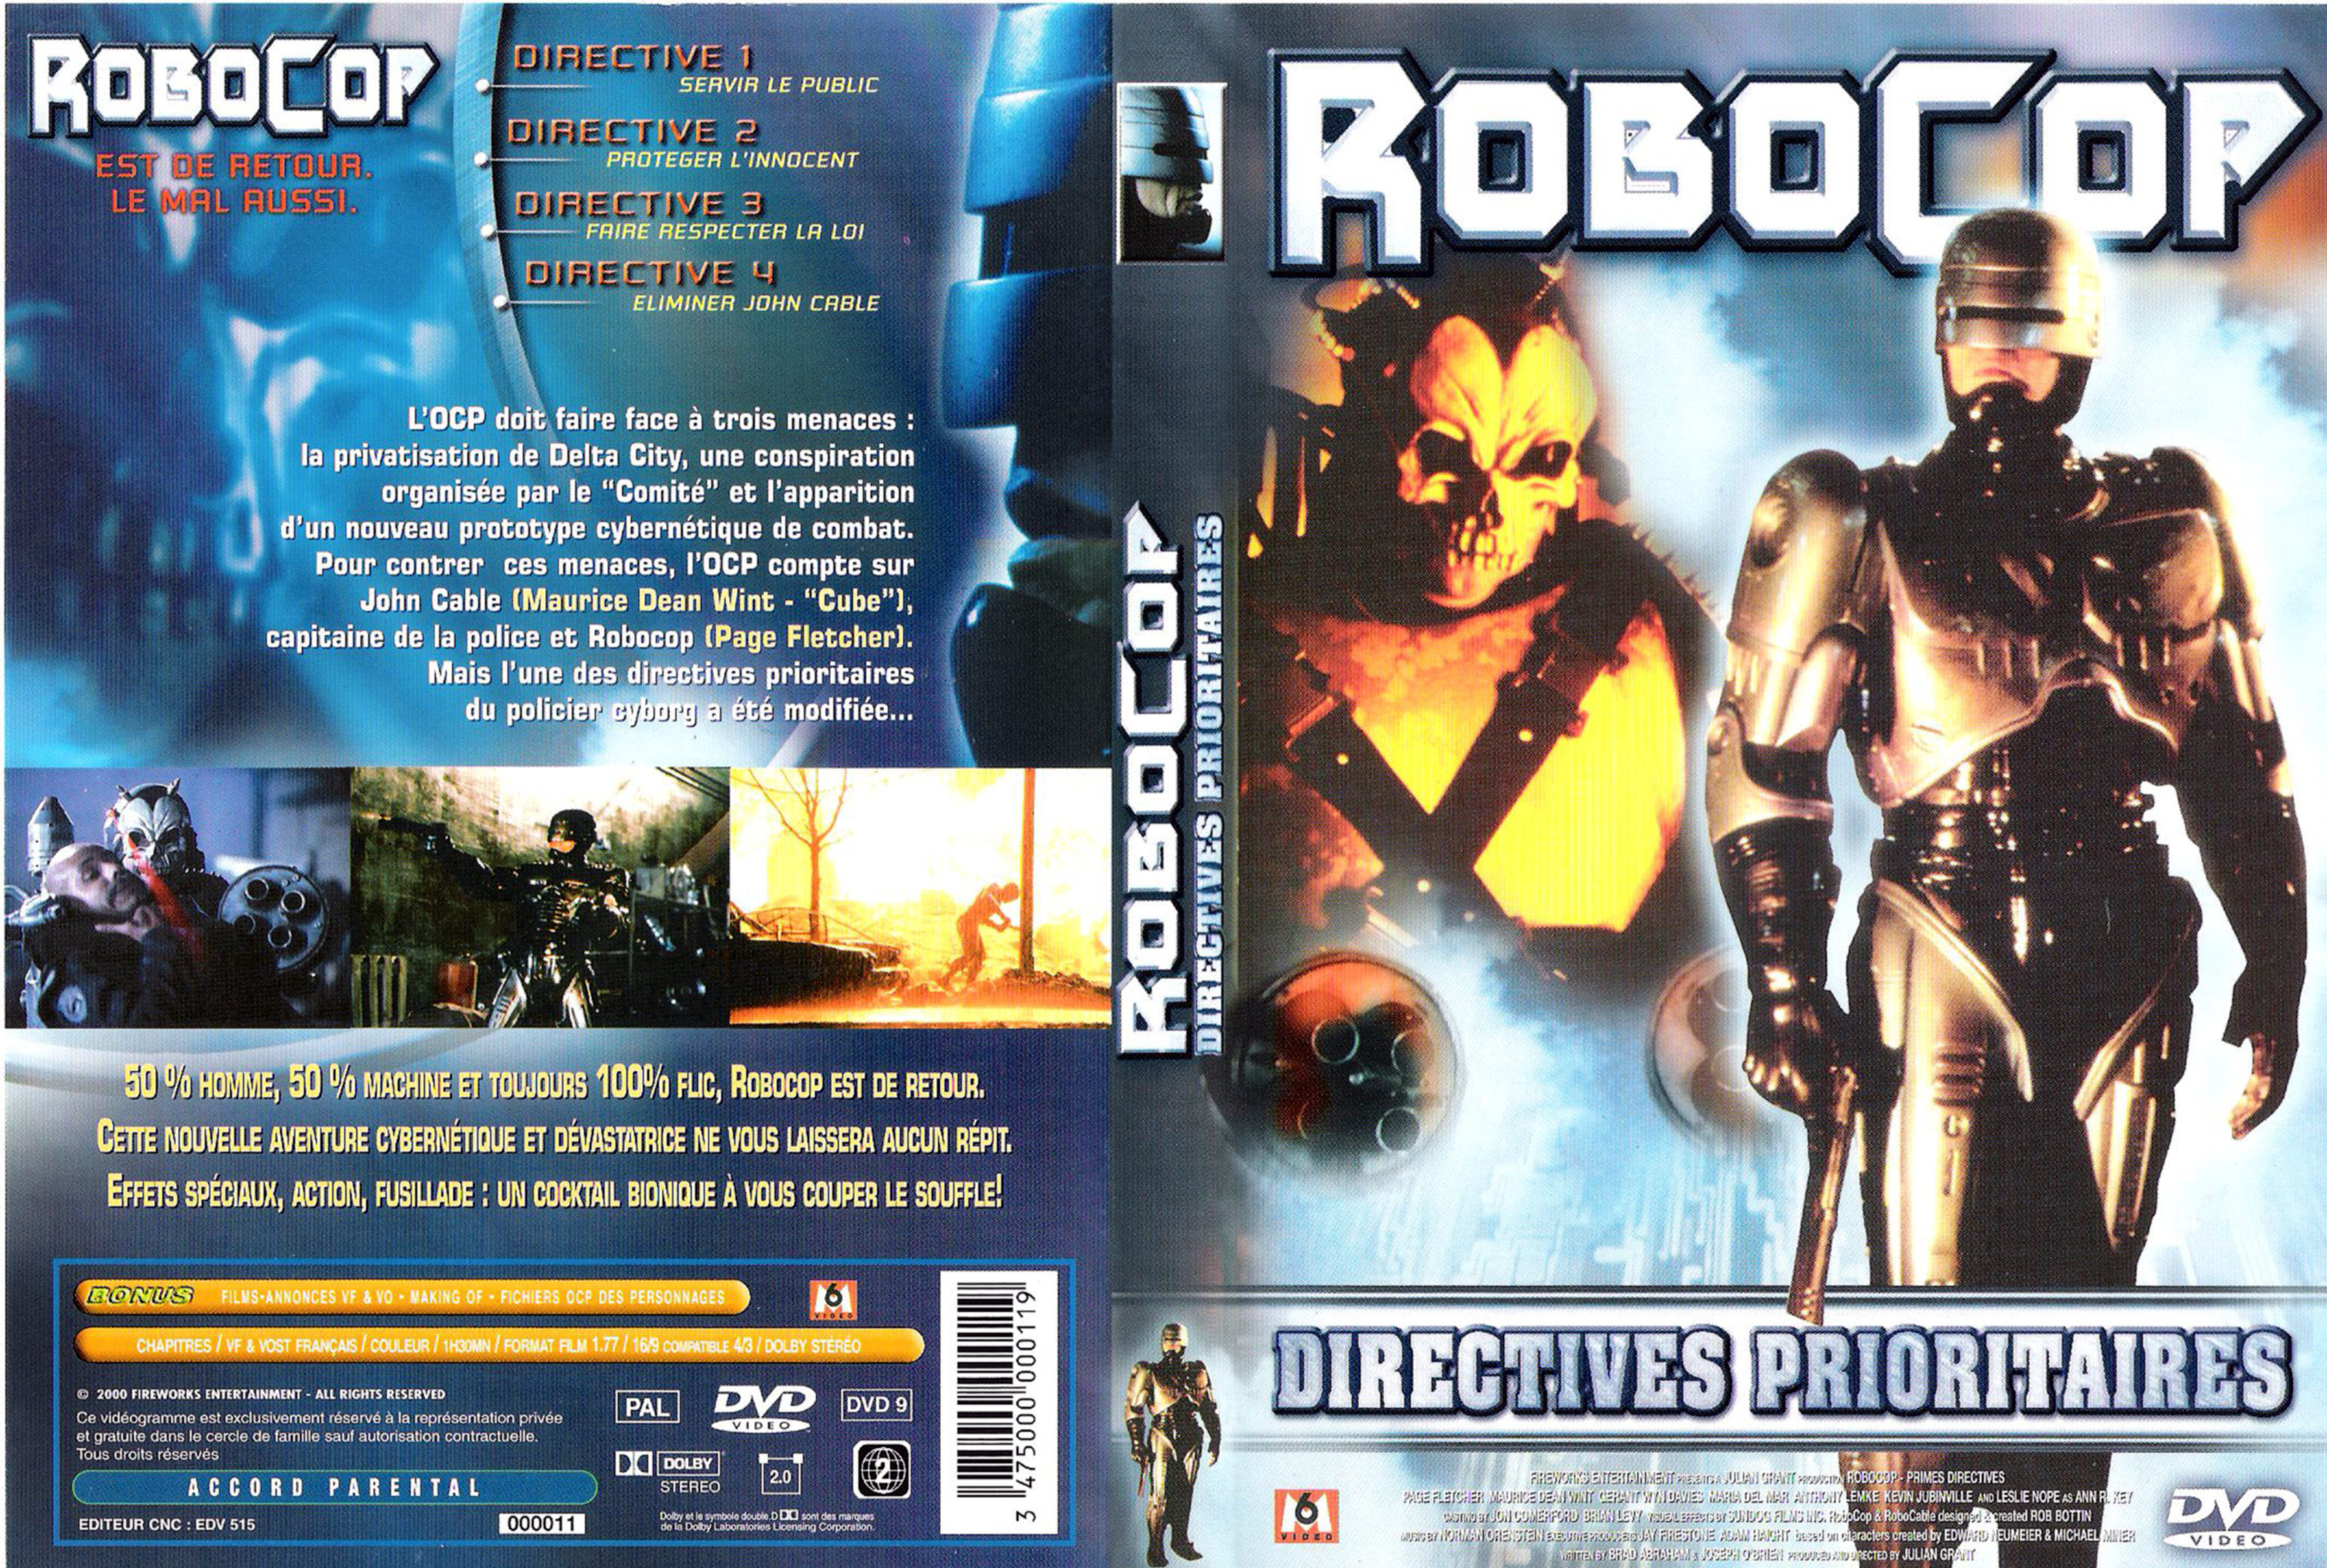 Jaquette DVD Robocop 2001 - directives prioritaires v2